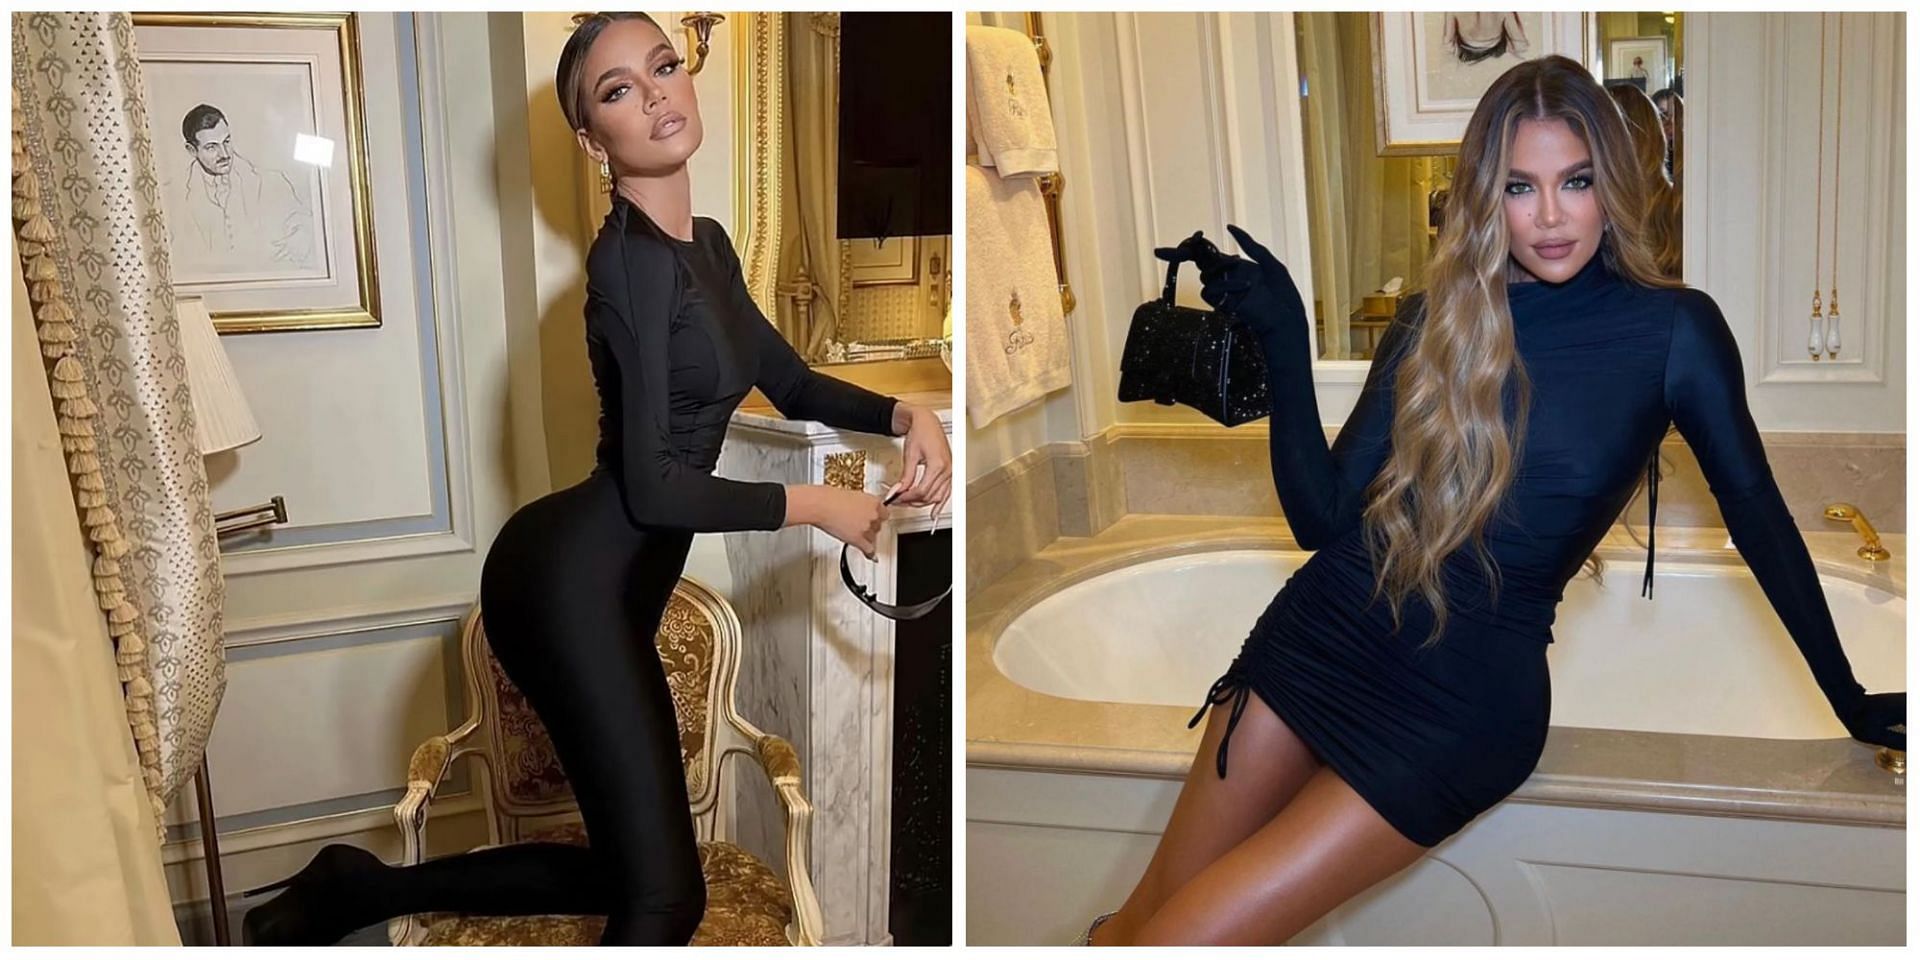 Khloe Kardashian and the photoshop drama: Did Khloe really photoshop her waistline? (Image via Khloe Kardashian/ Instagram)